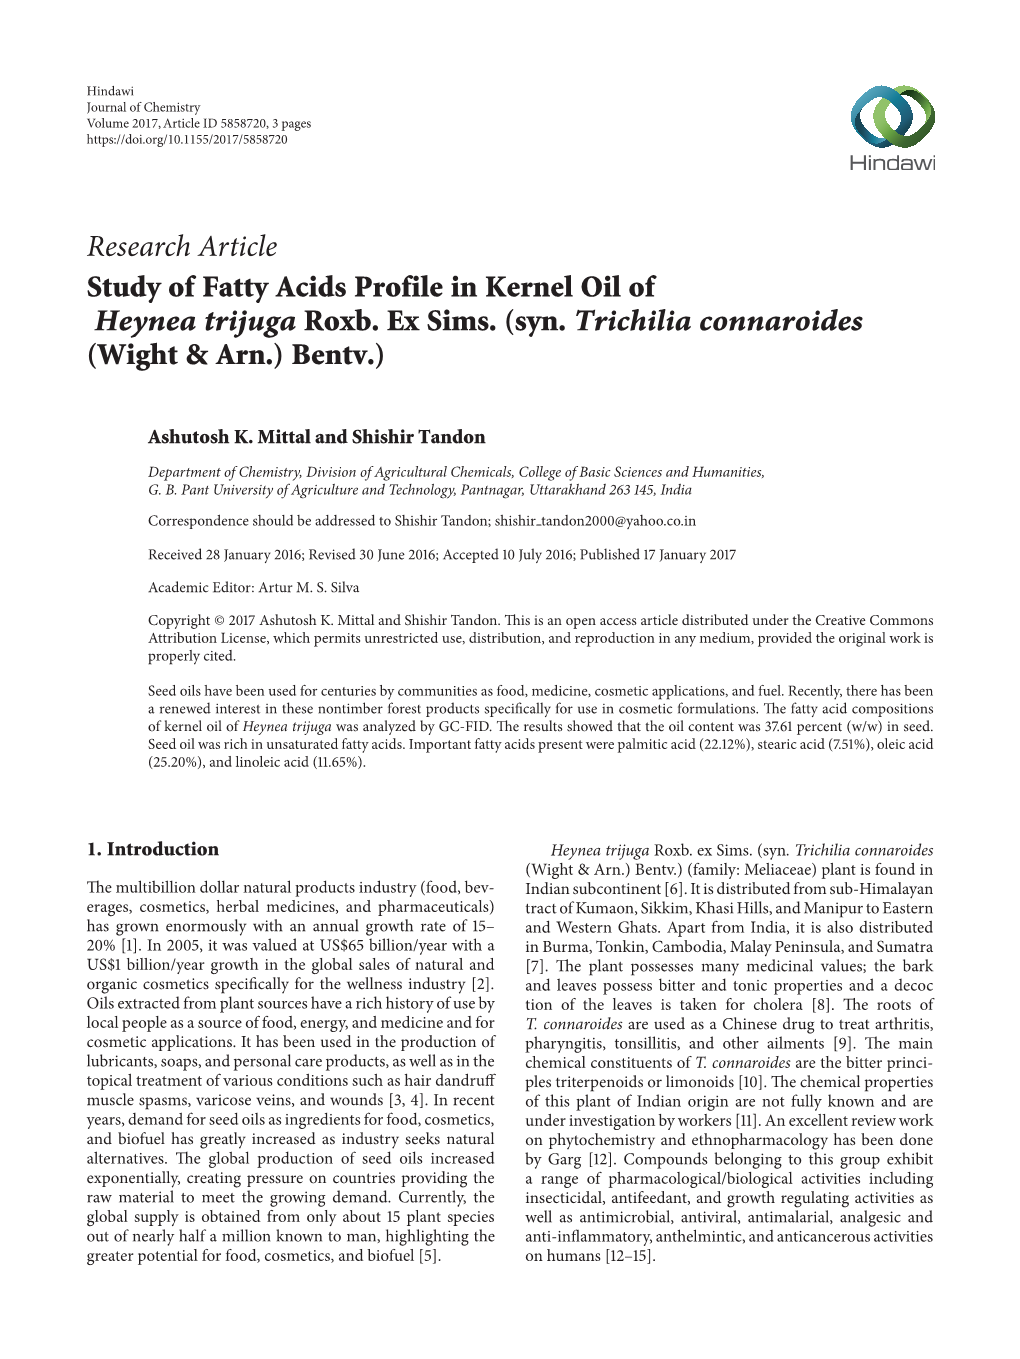 Study of Fatty Acids Profile in Kernel Oil of Heynea Trijuga Roxb. Ex Sims